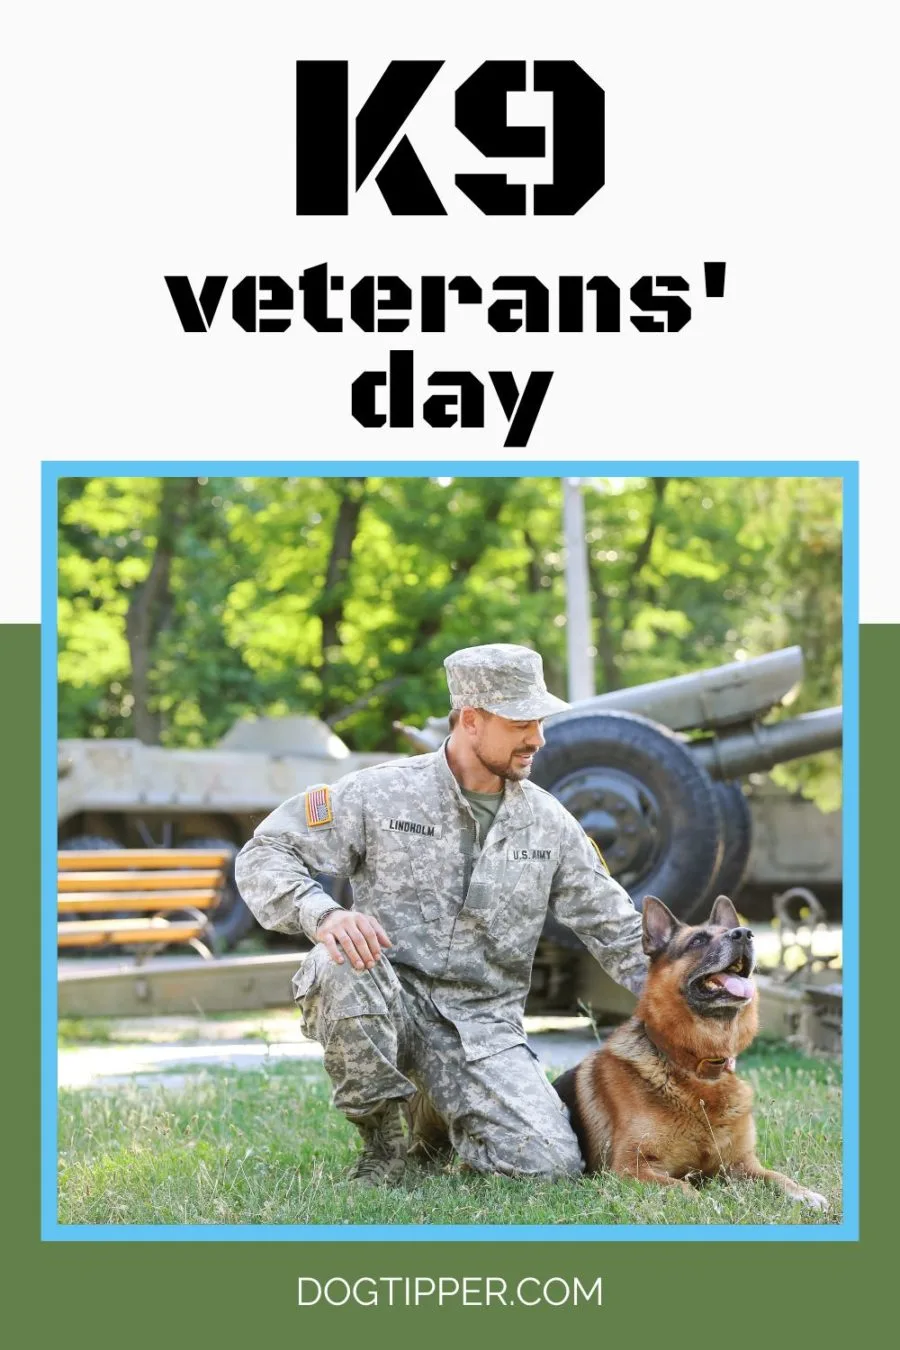 K9 Veterans' Day, March 13